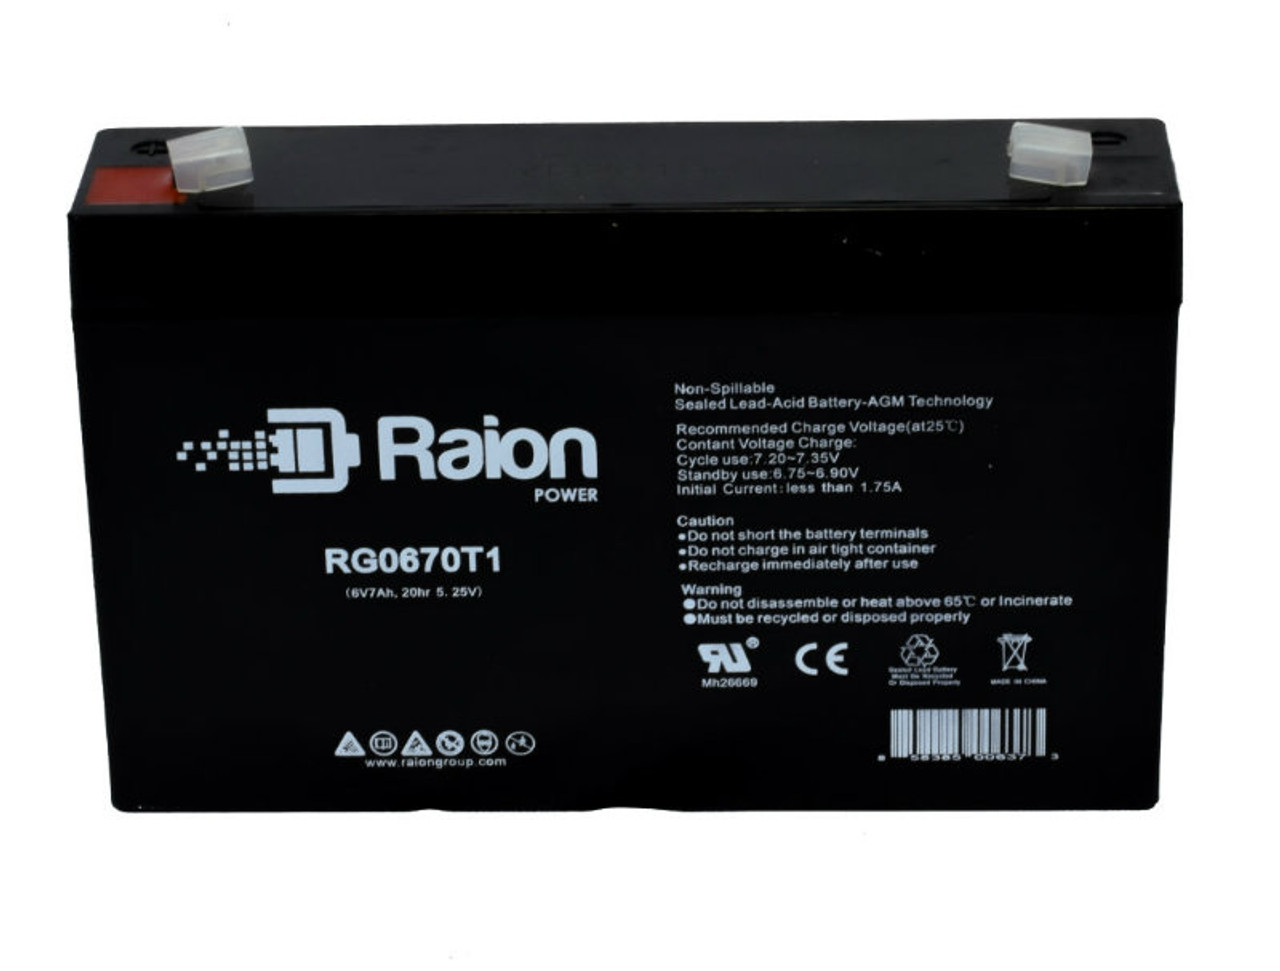 Raion Power RG0670T1 Replacement Battery Cartridge for Peak Energy PK6V7.2F1